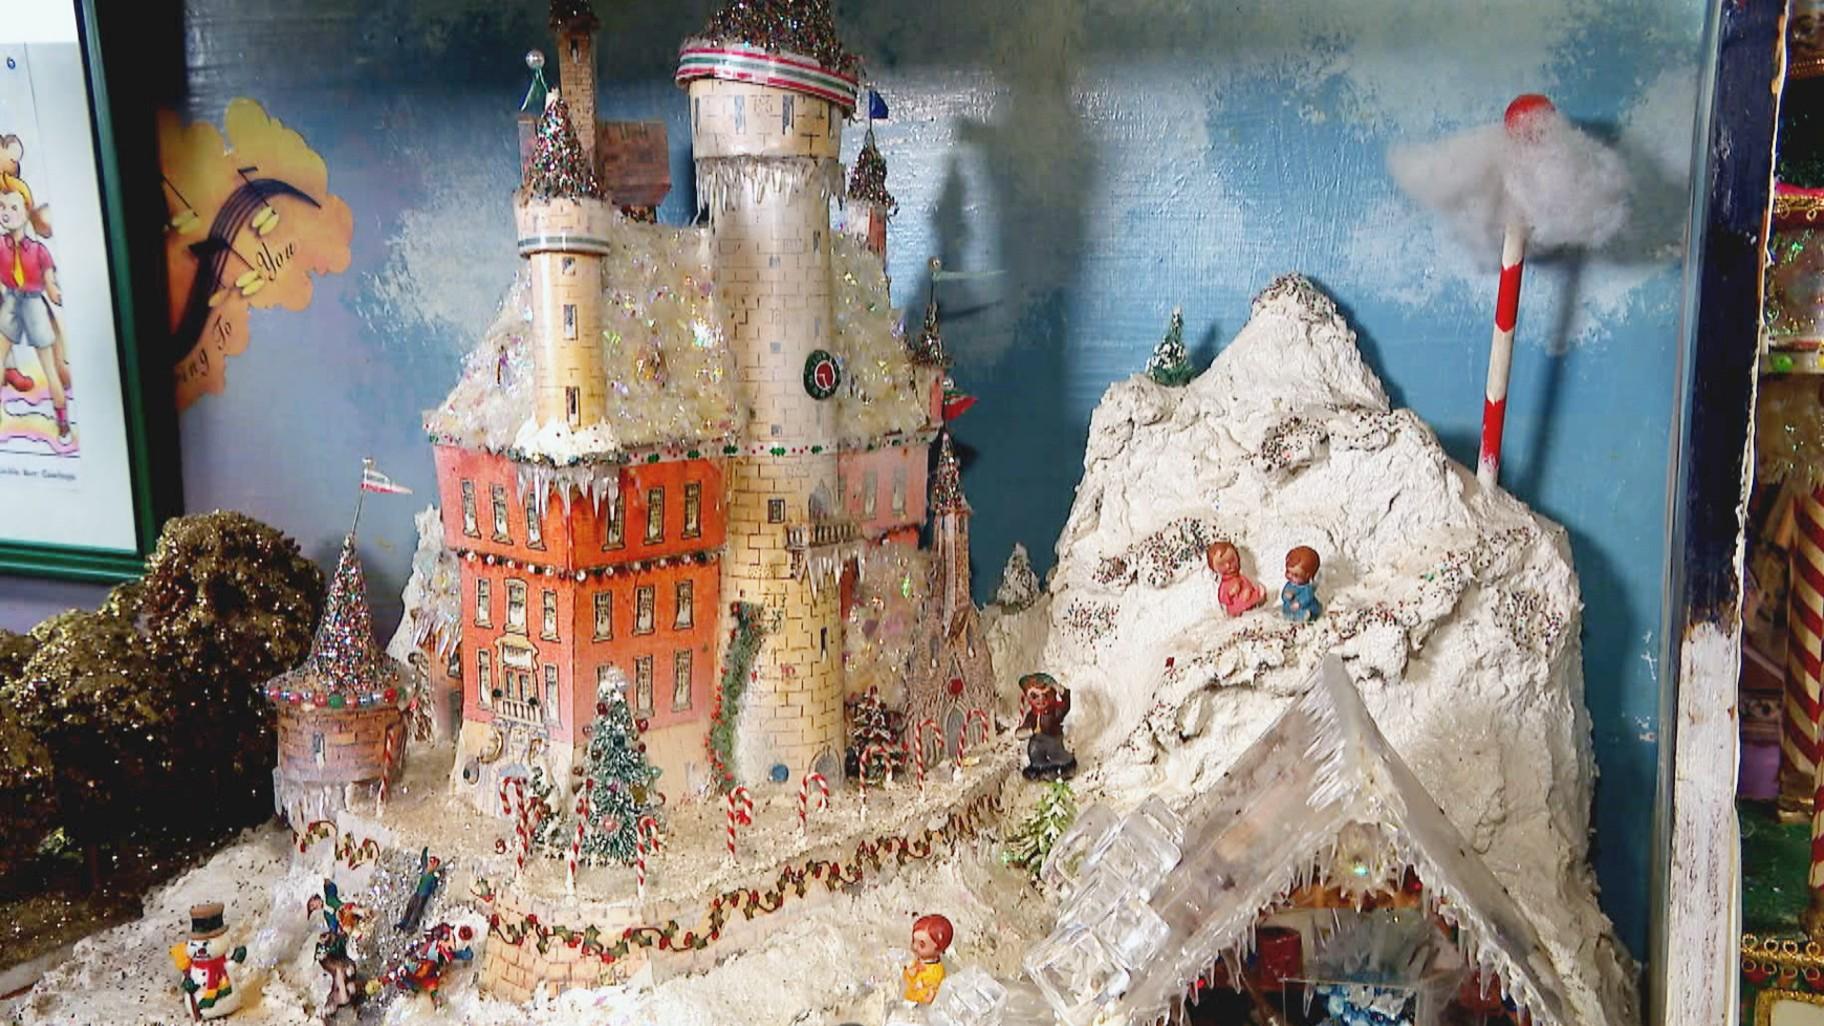 The Maybeland diorama by Ronald Konecki. (WTTW News)